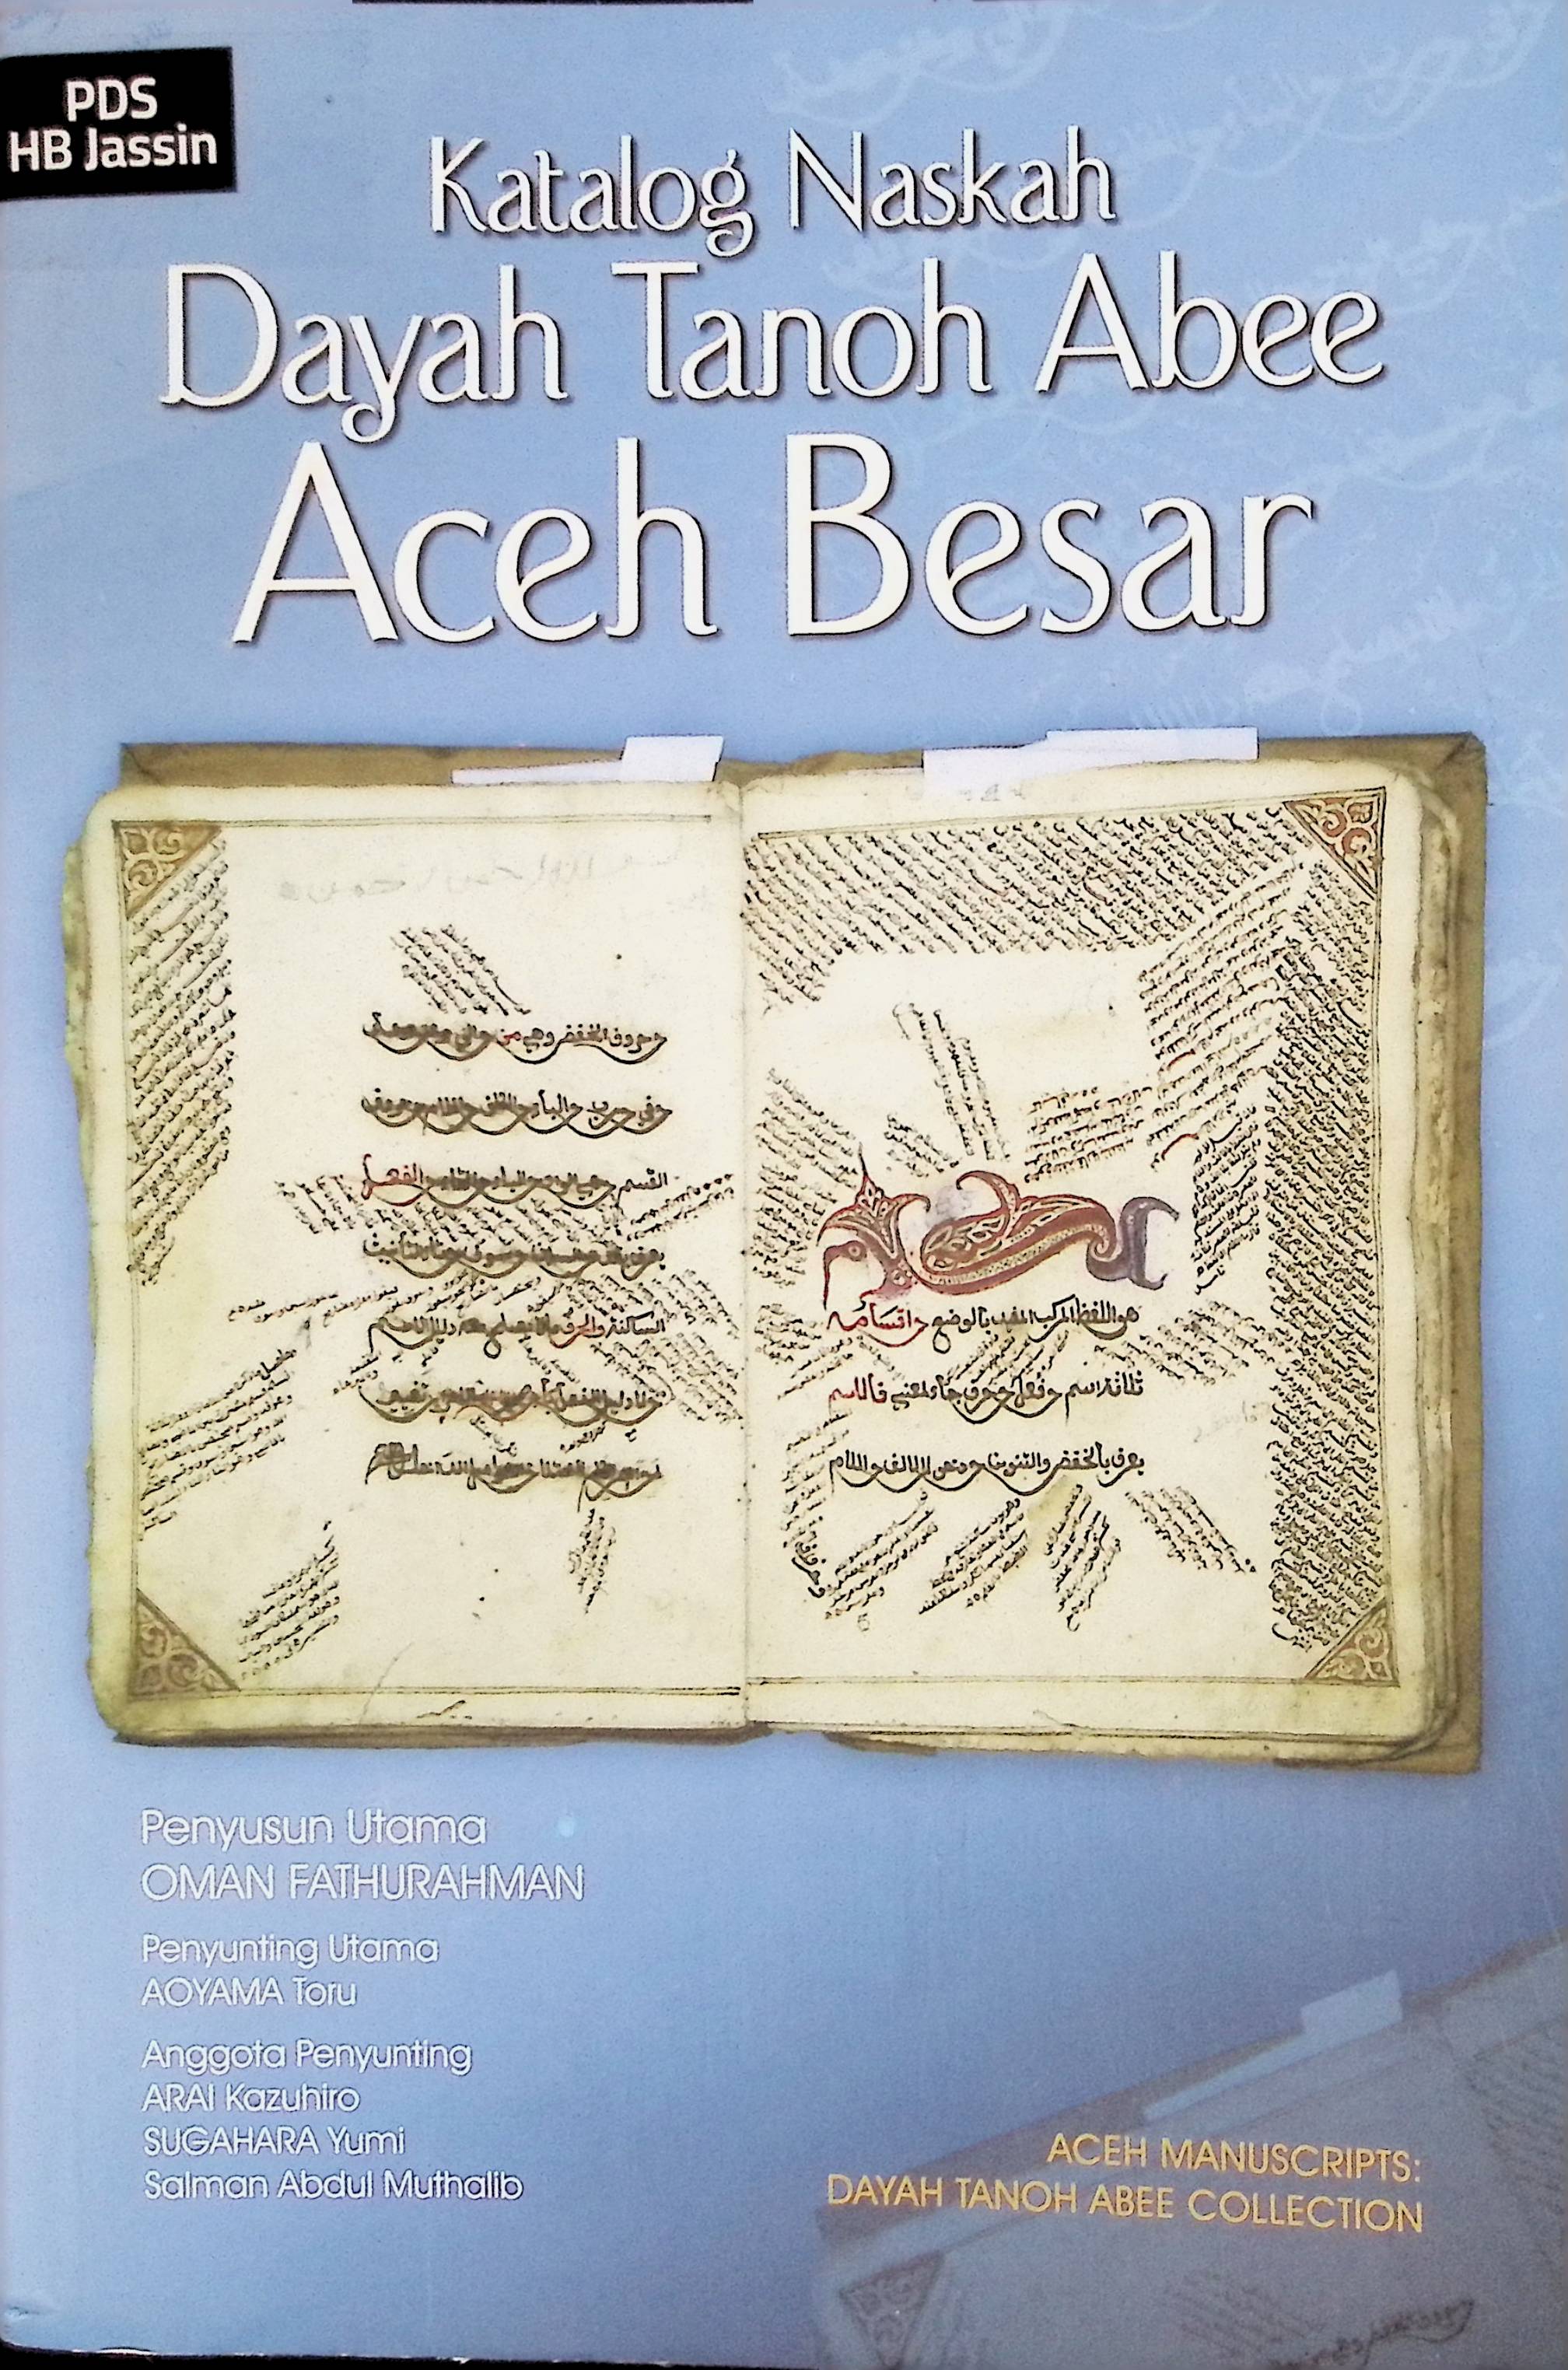 Katalog Naskah Dayah Tanoh Abee Aceh Besar